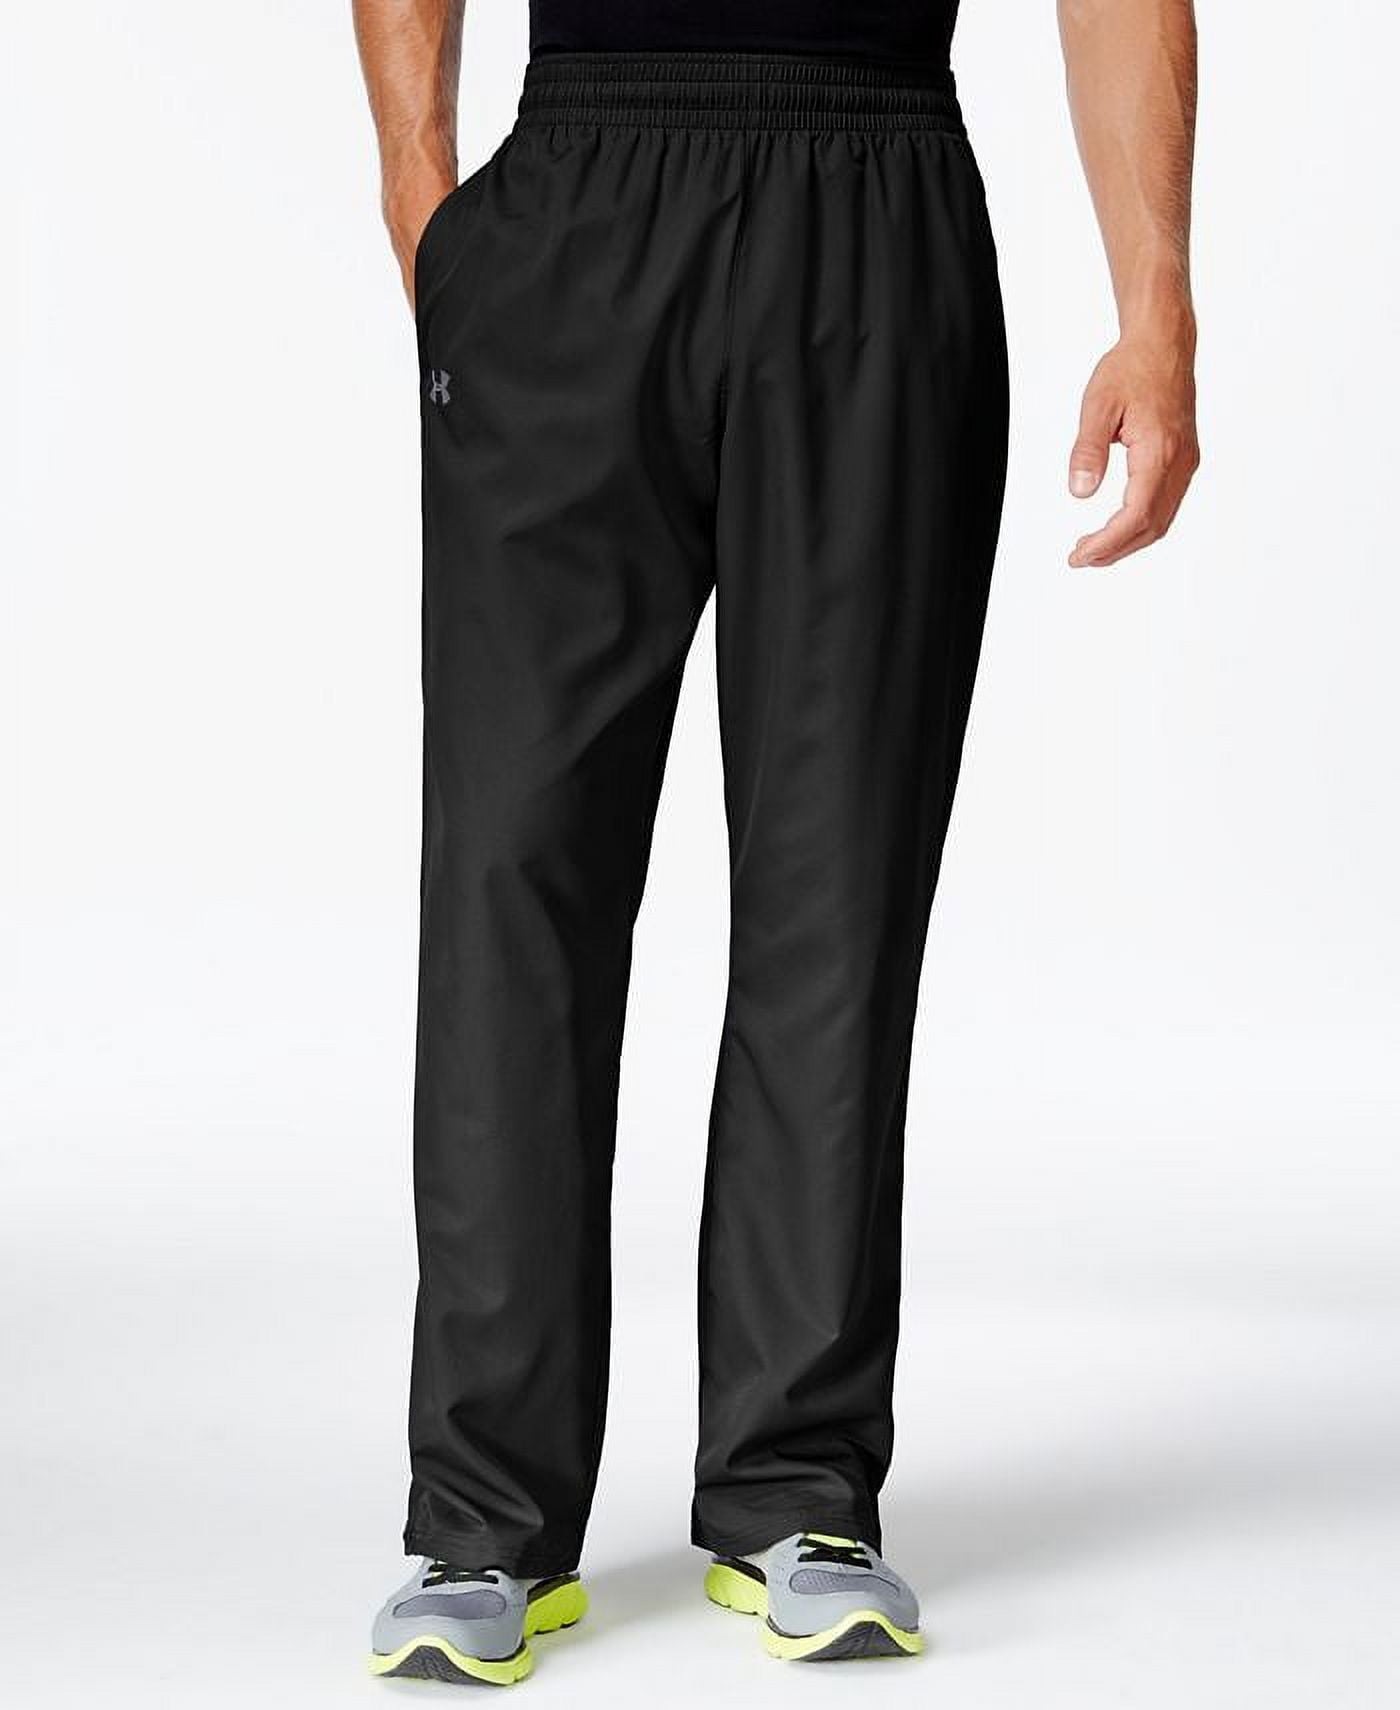 Under Armour Men's Vital Warm-Up Pants, Black/Graphite, Large : :  Clothing, Shoes & Accessories